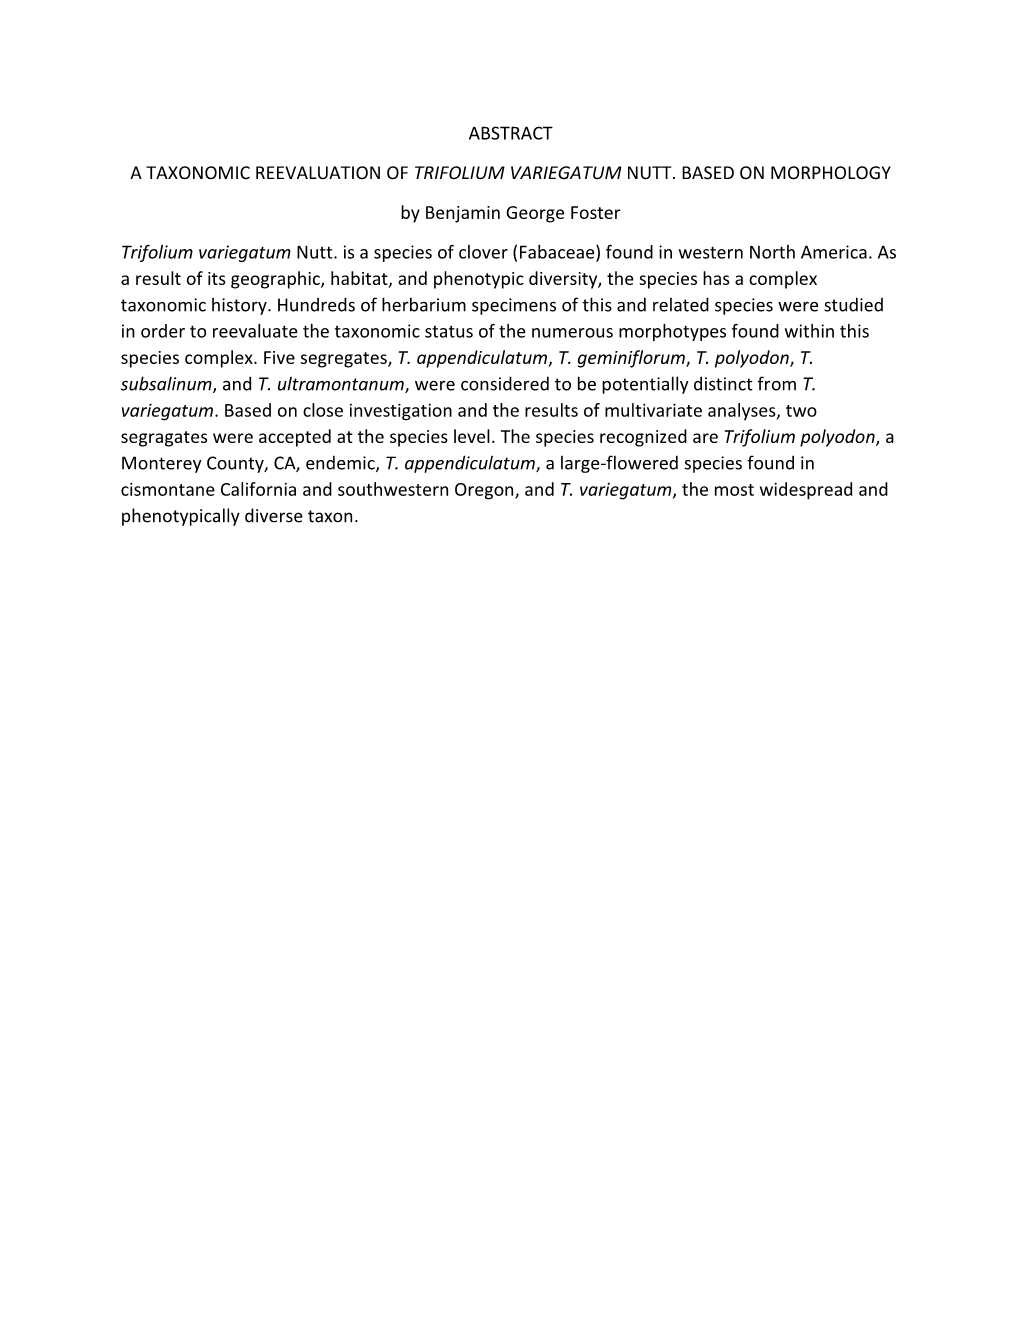 Abstract a Taxonomic Reevaluation of Trifolium Variegatum Nutt